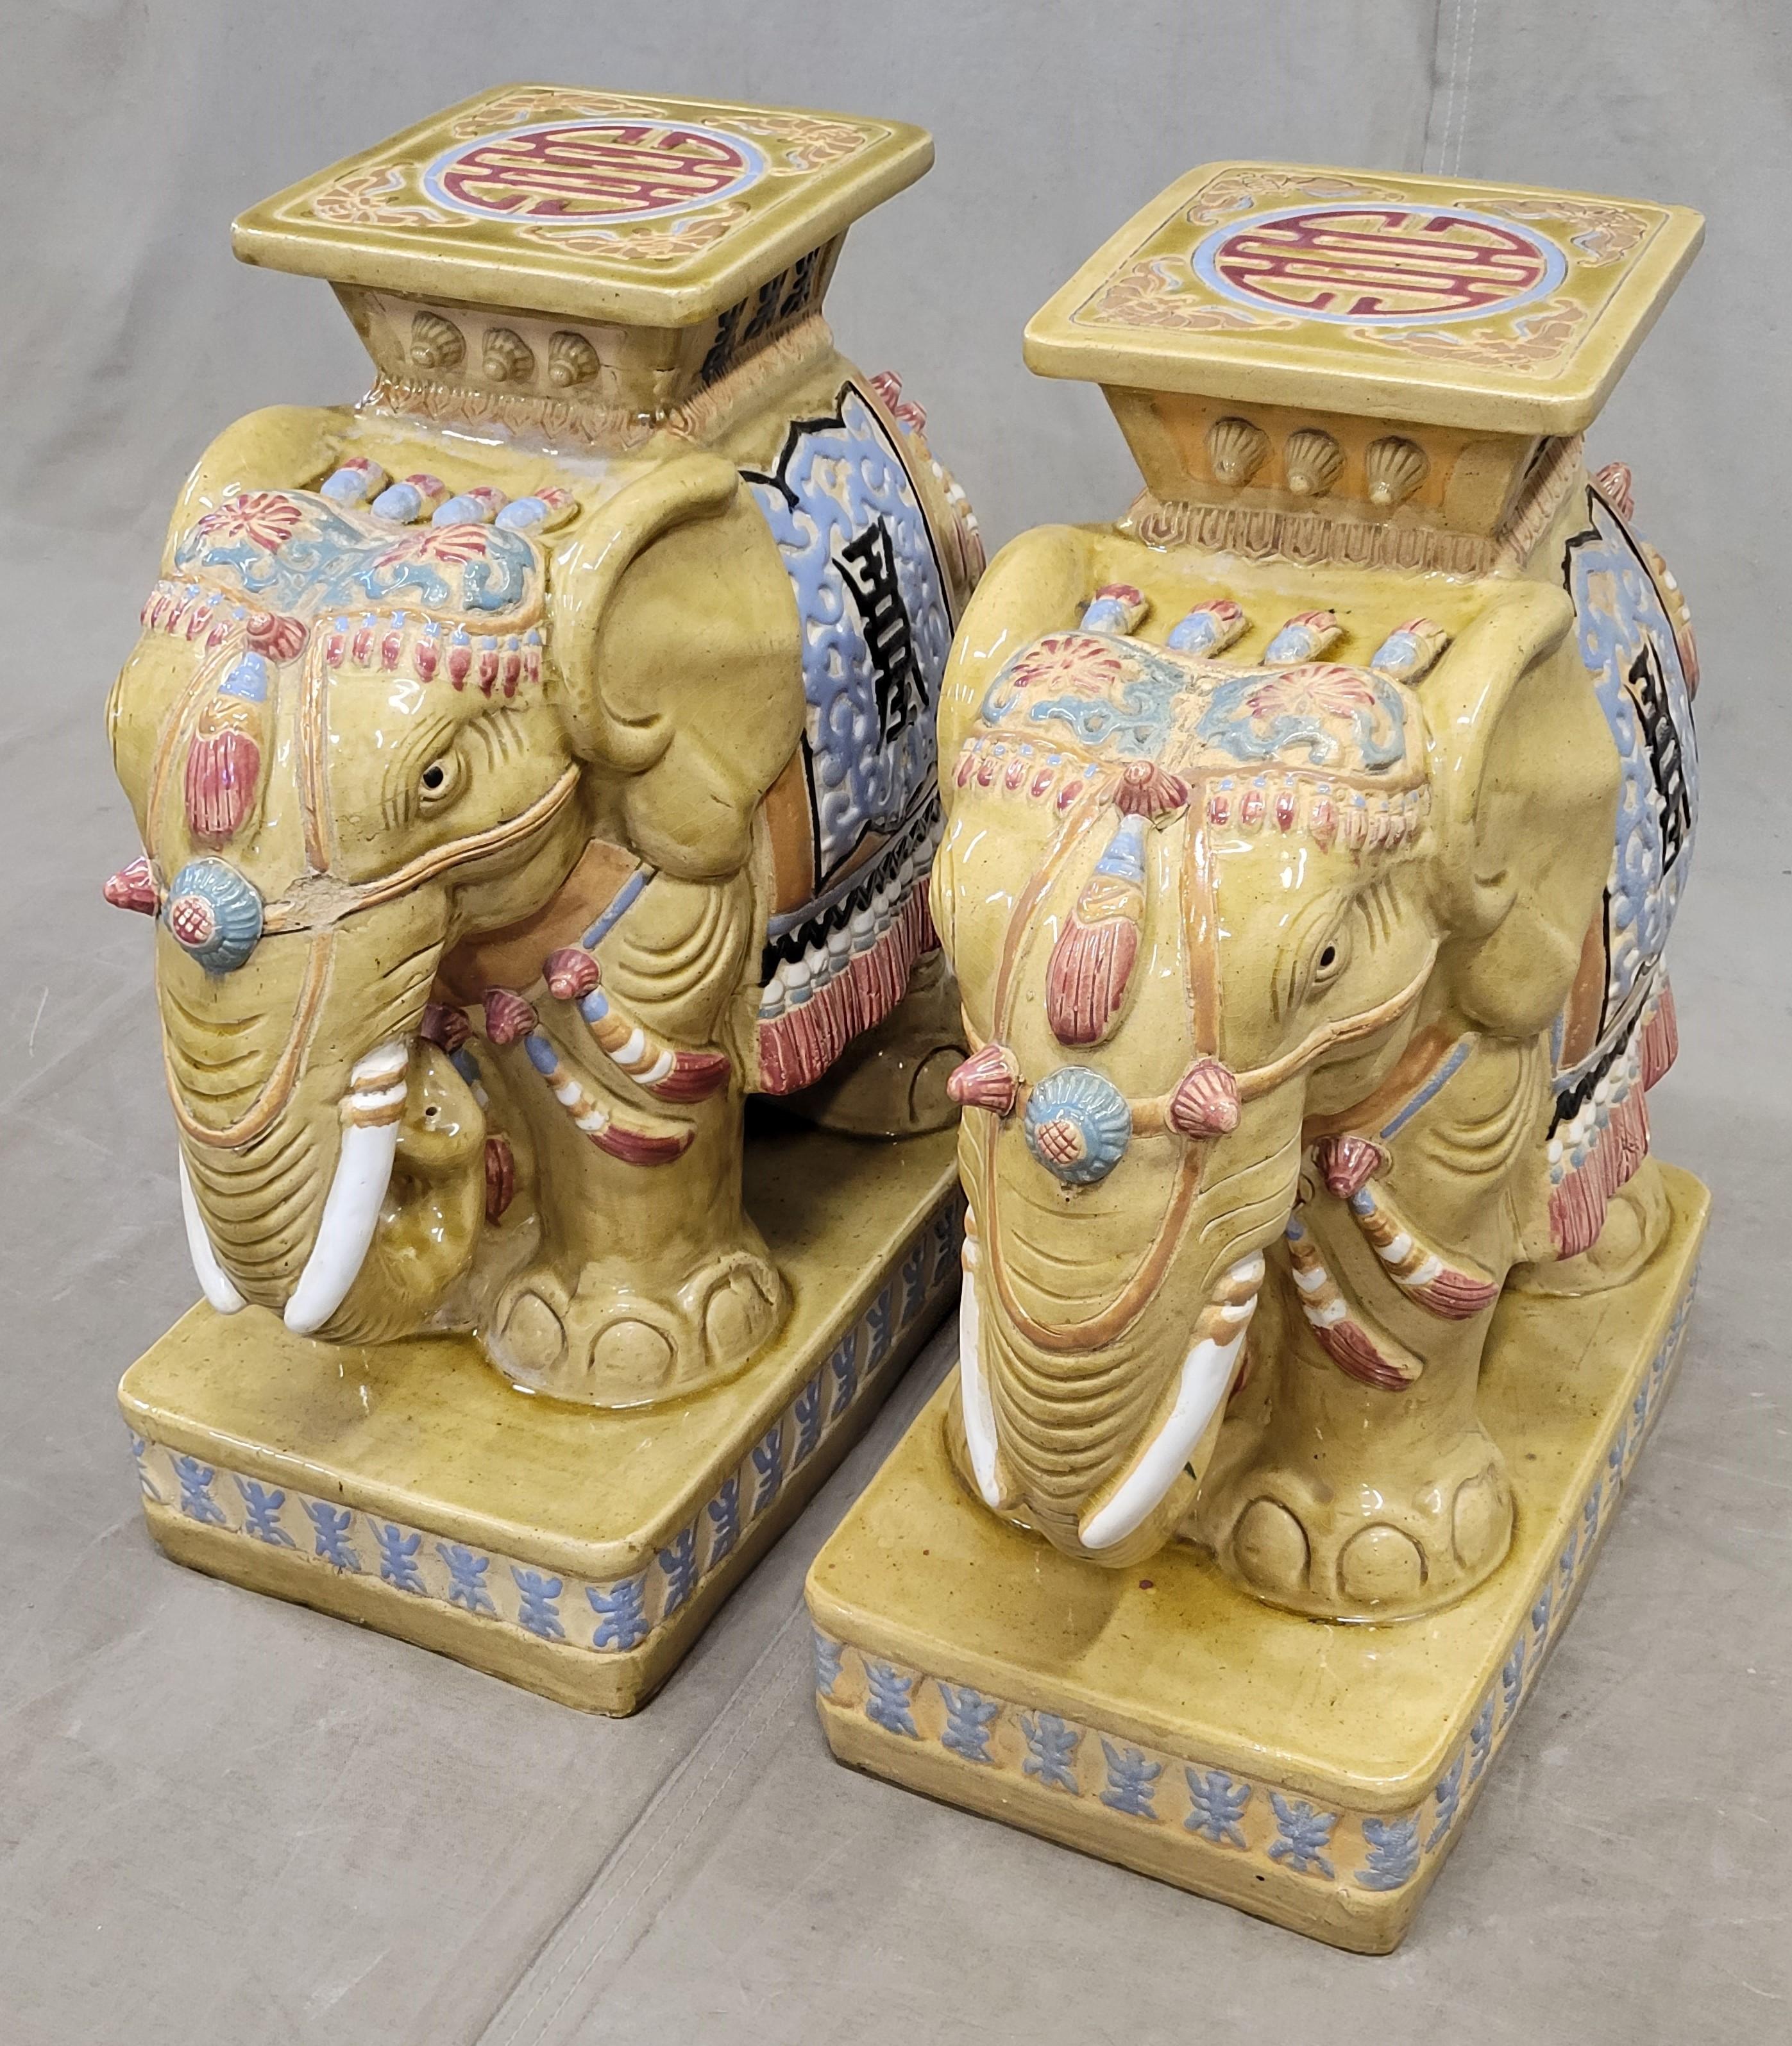 Asian Vintage Ceramic Elephant Garden Stools - a Pair